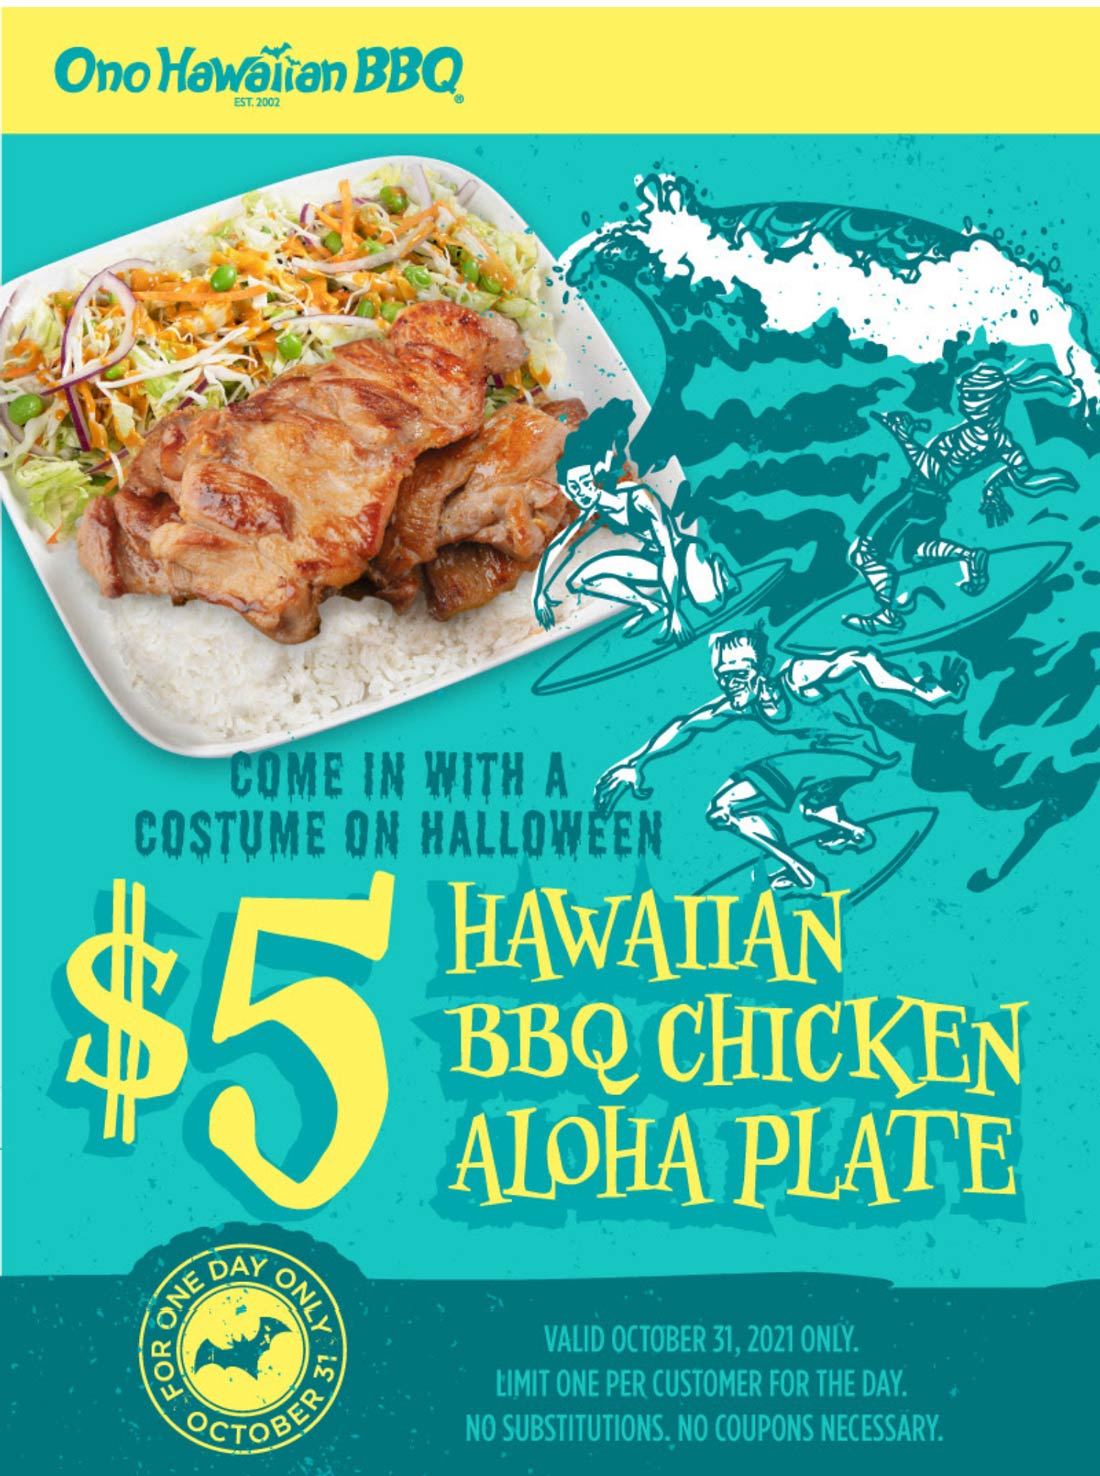 $5 chicken aloha plate in costume Sunday at Ono Hawaiian BBQ #